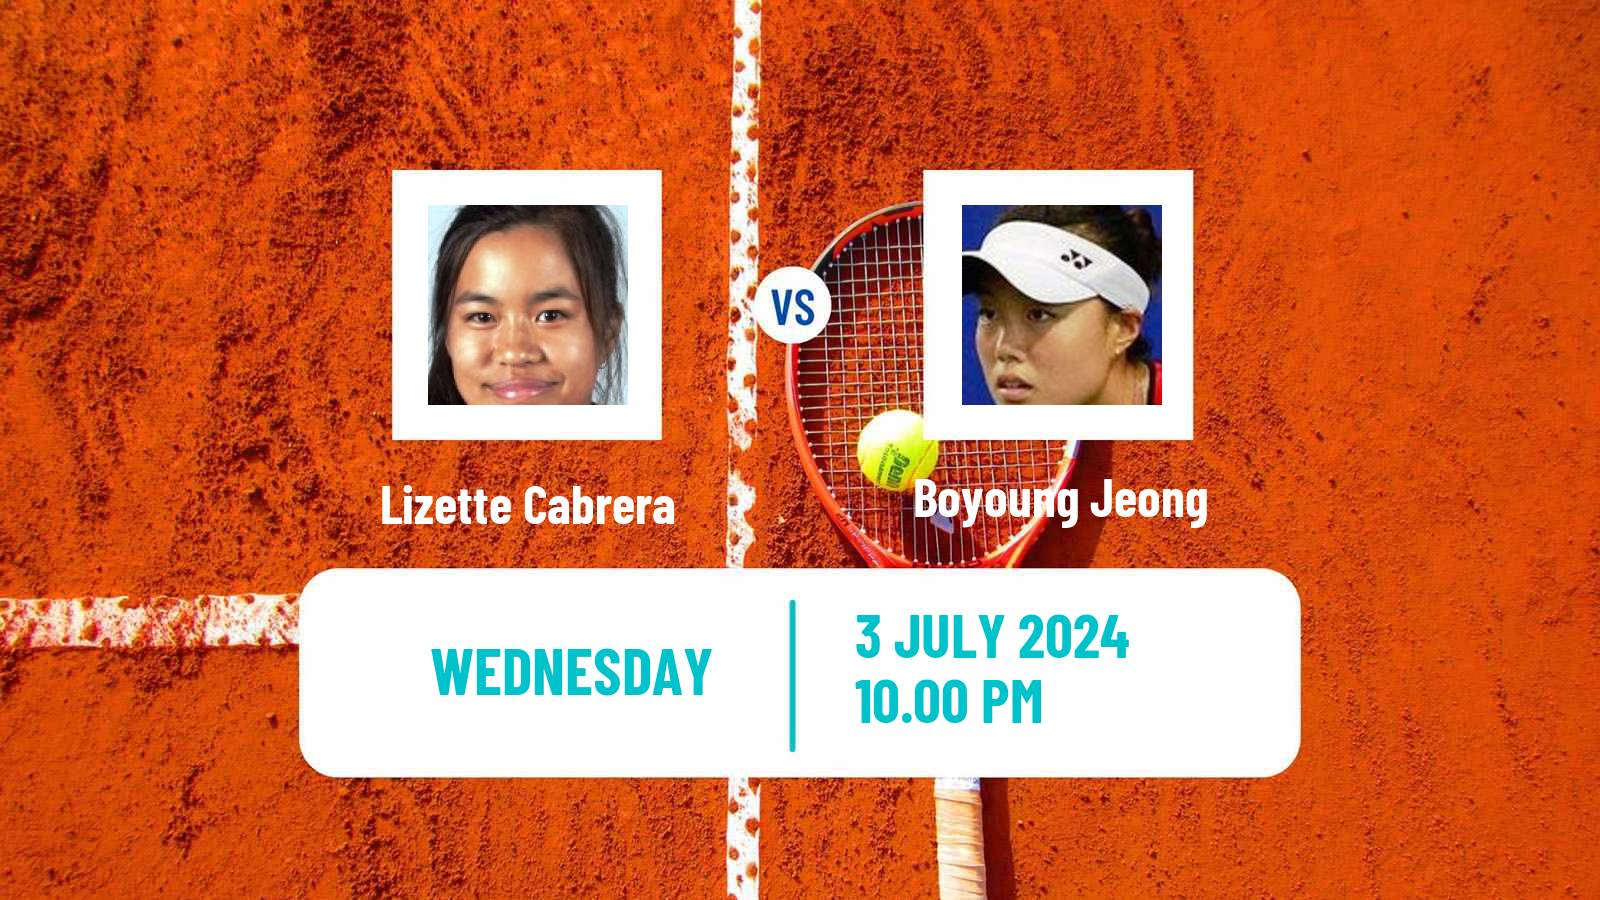 Tennis ITF W35 Nakhon Si Thammarat 2 Women Lizette Cabrera - Boyoung Jeong